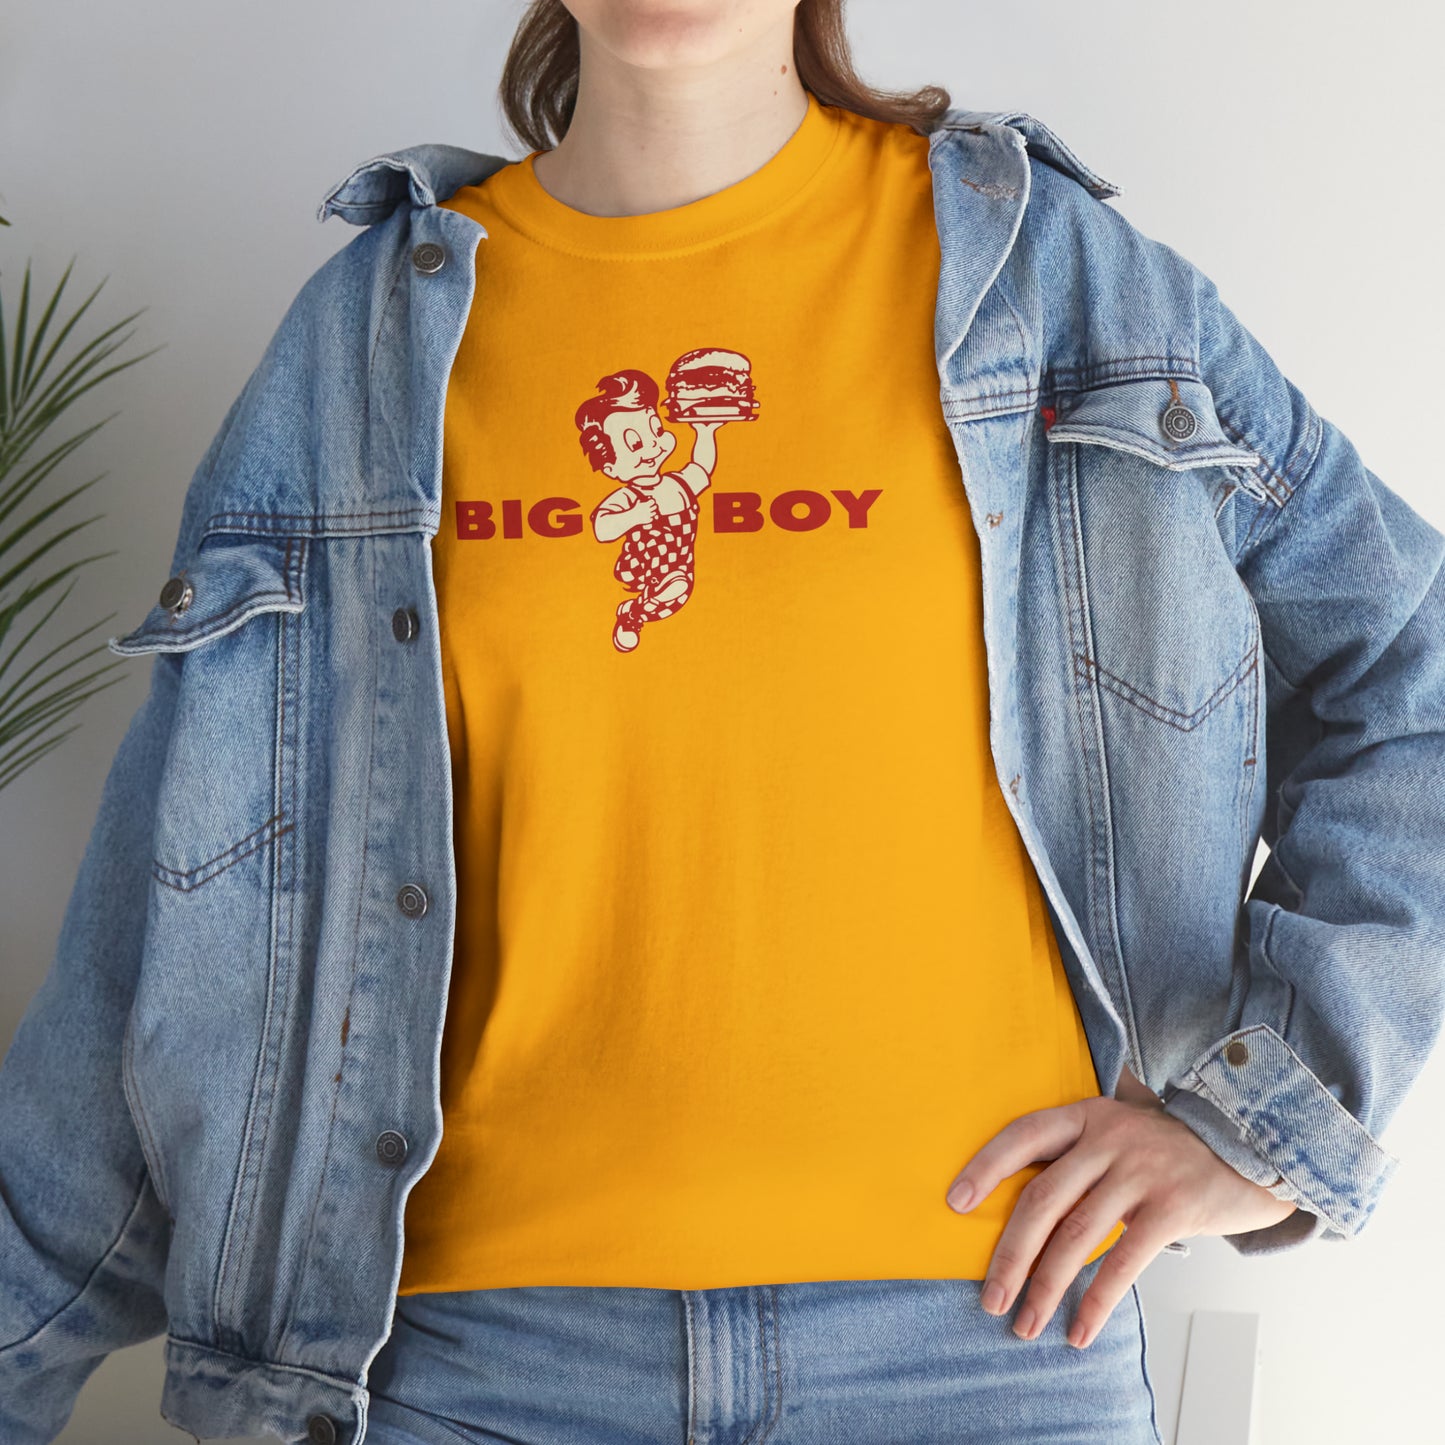 Big Boy T-Shirt